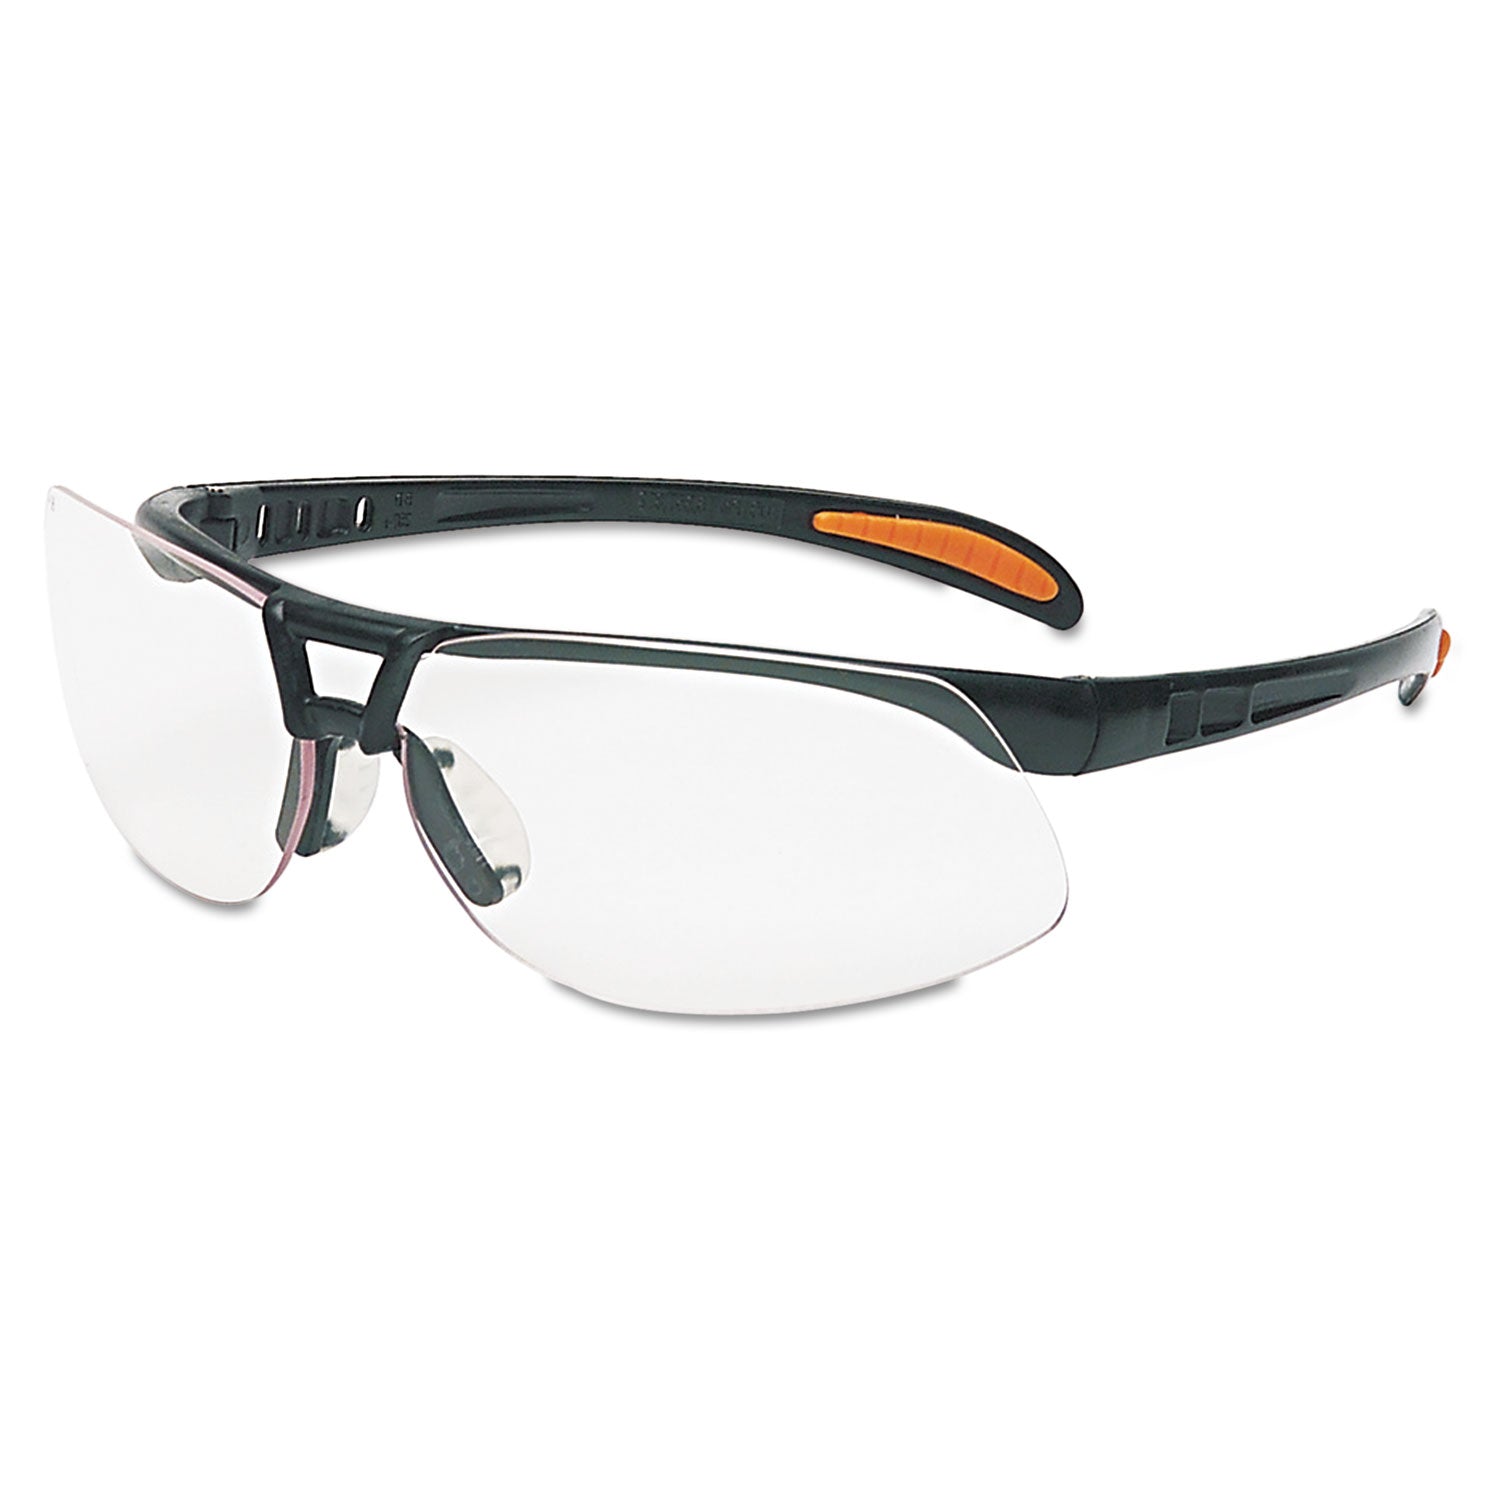 protege-safety-eyewear-metallic-black-frame-clear-lens_uvxs4200 - 1